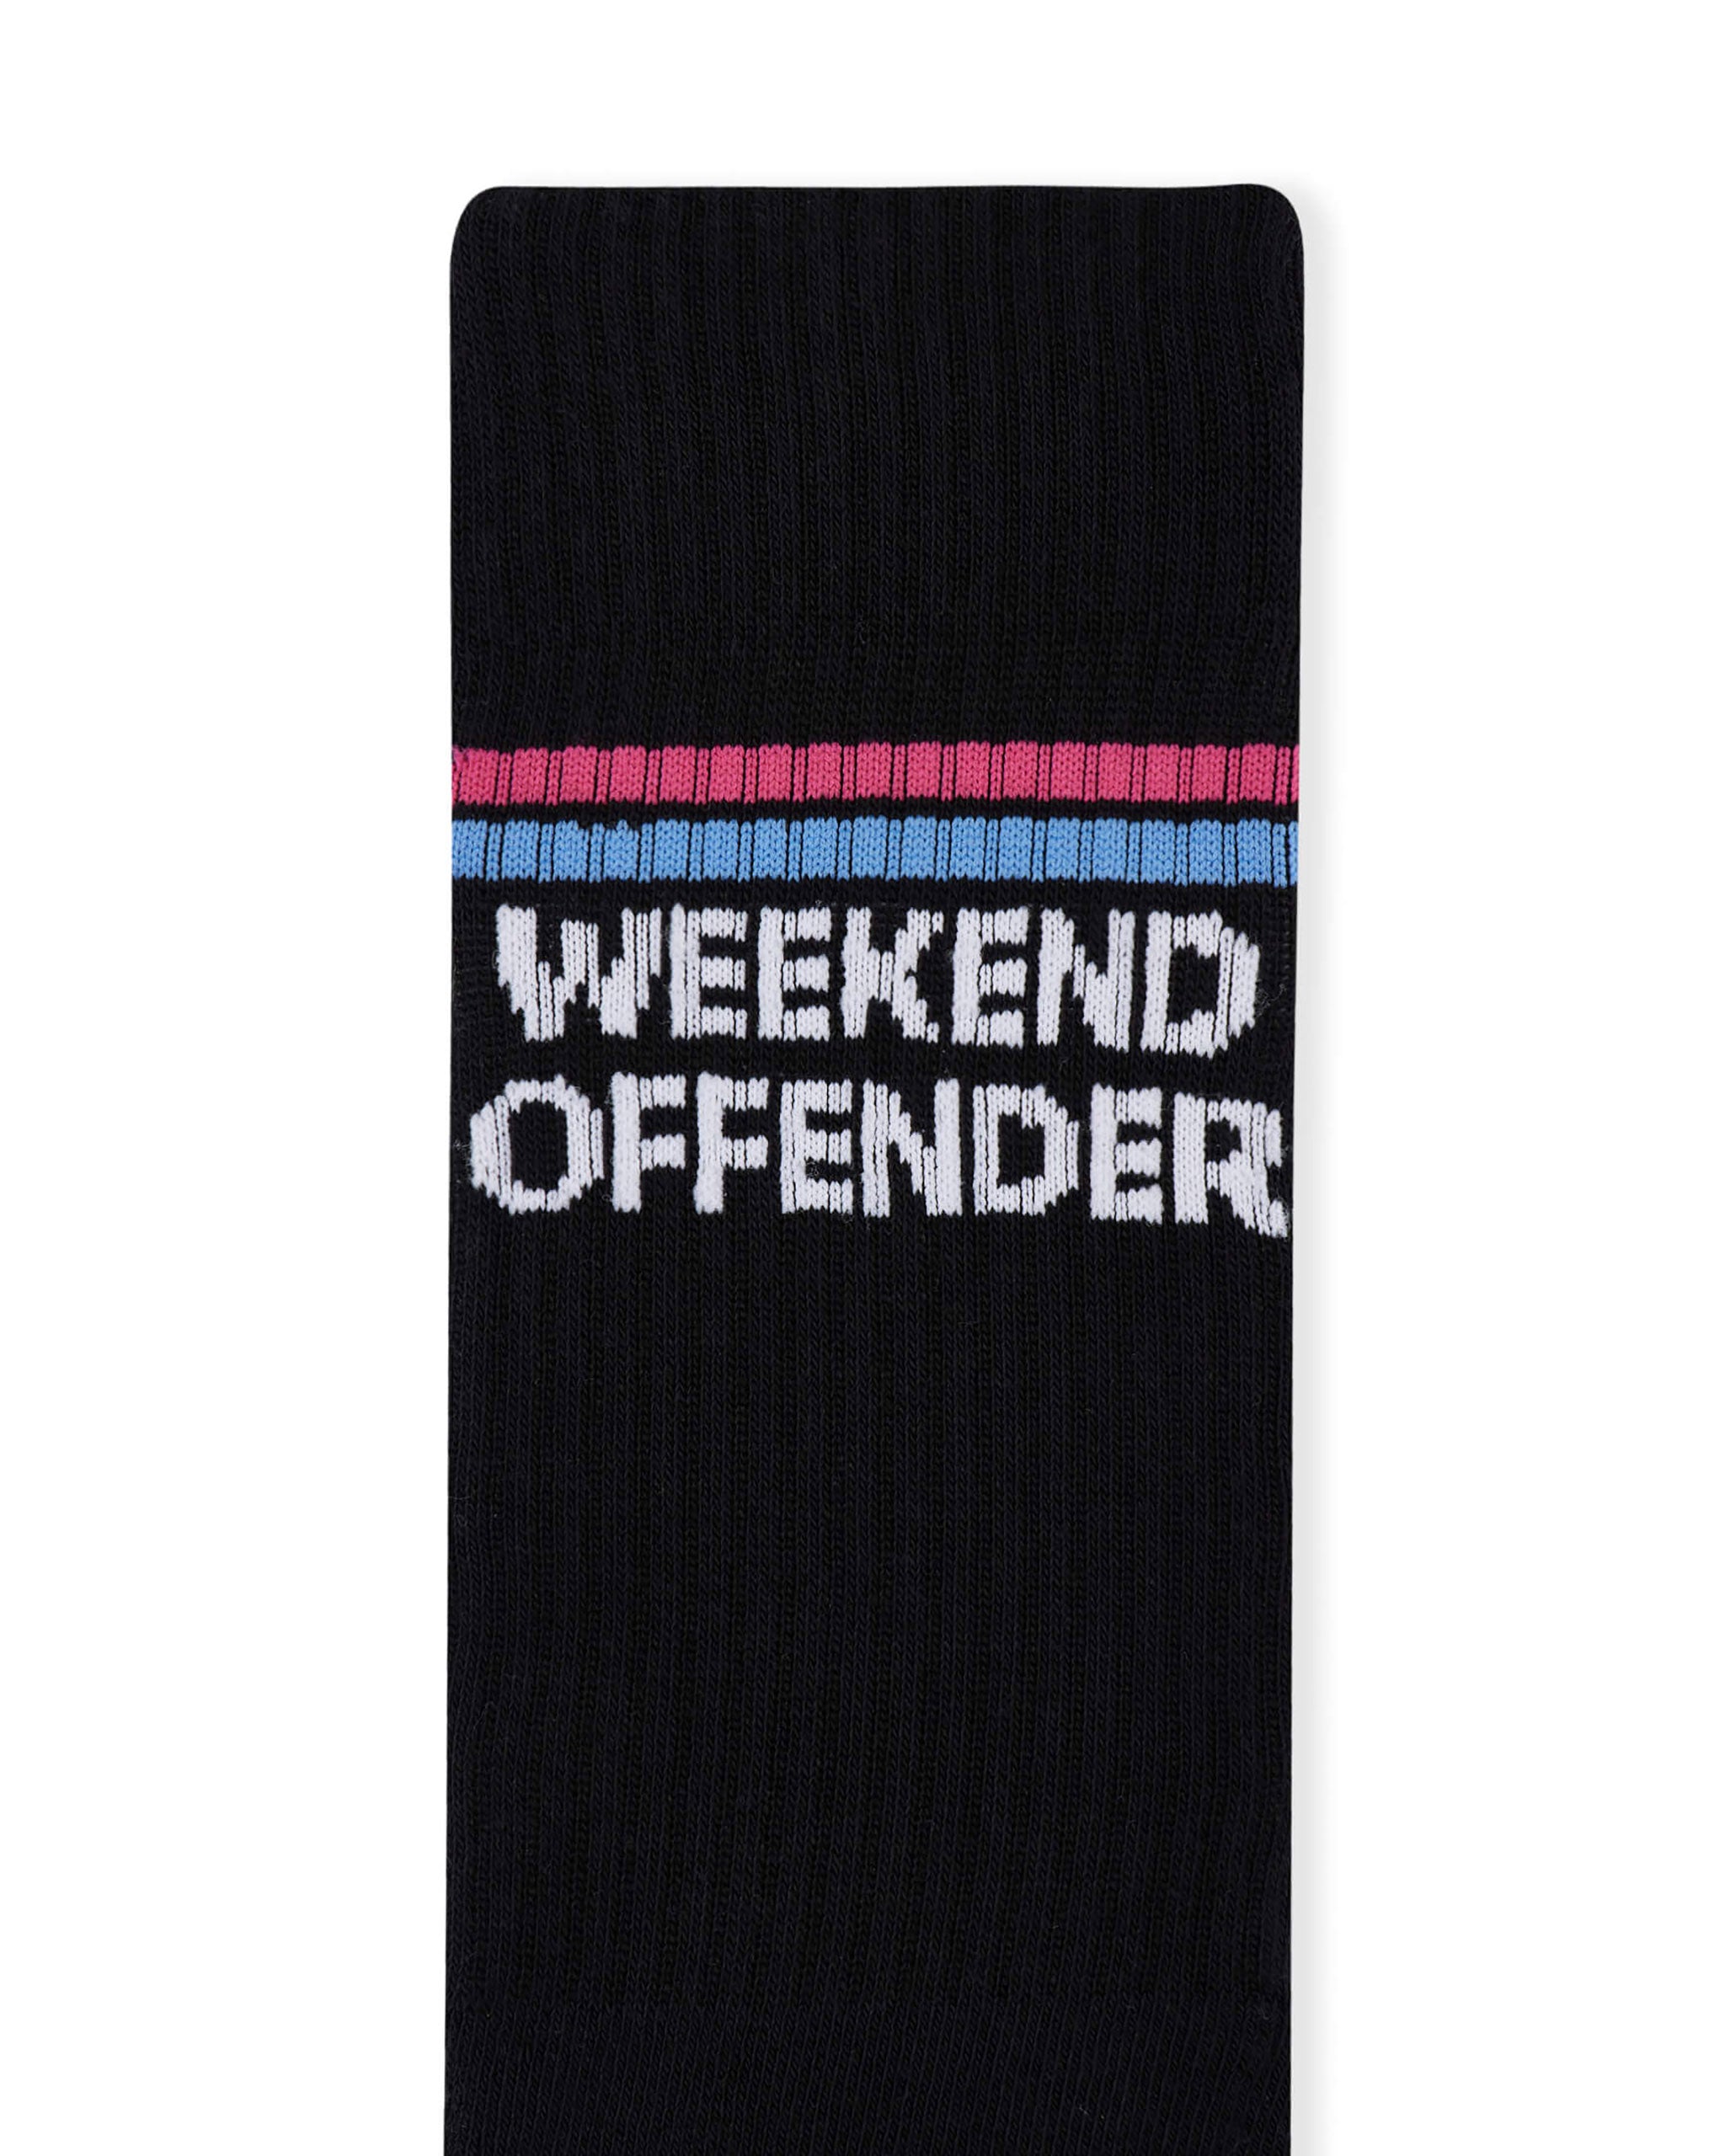 Twin Stripe Sports Socks Black Pack of 3 – Weekend Offender